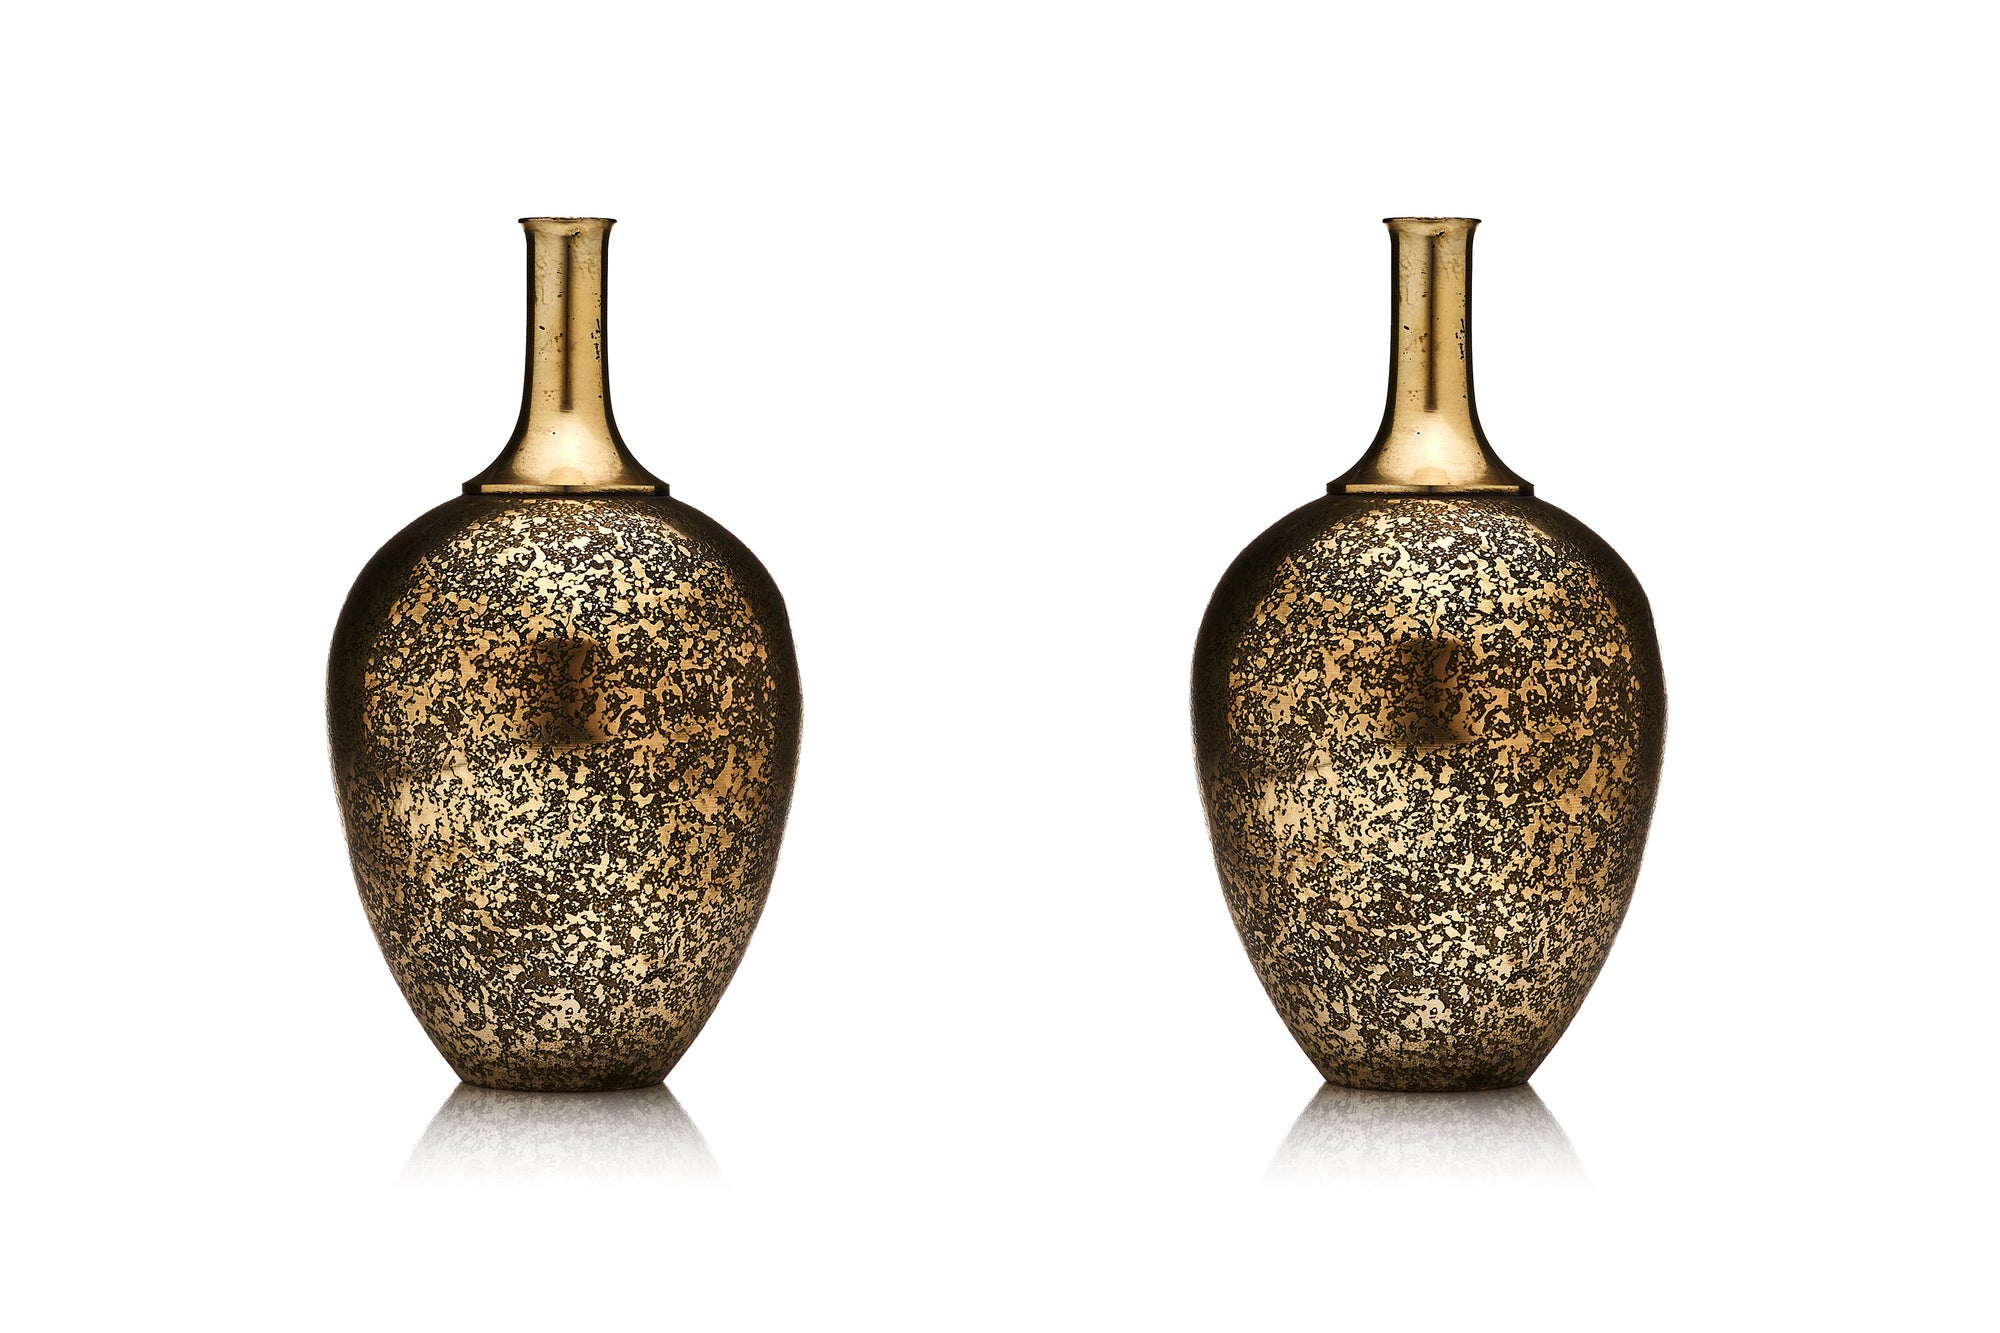 Cast Brass Vases